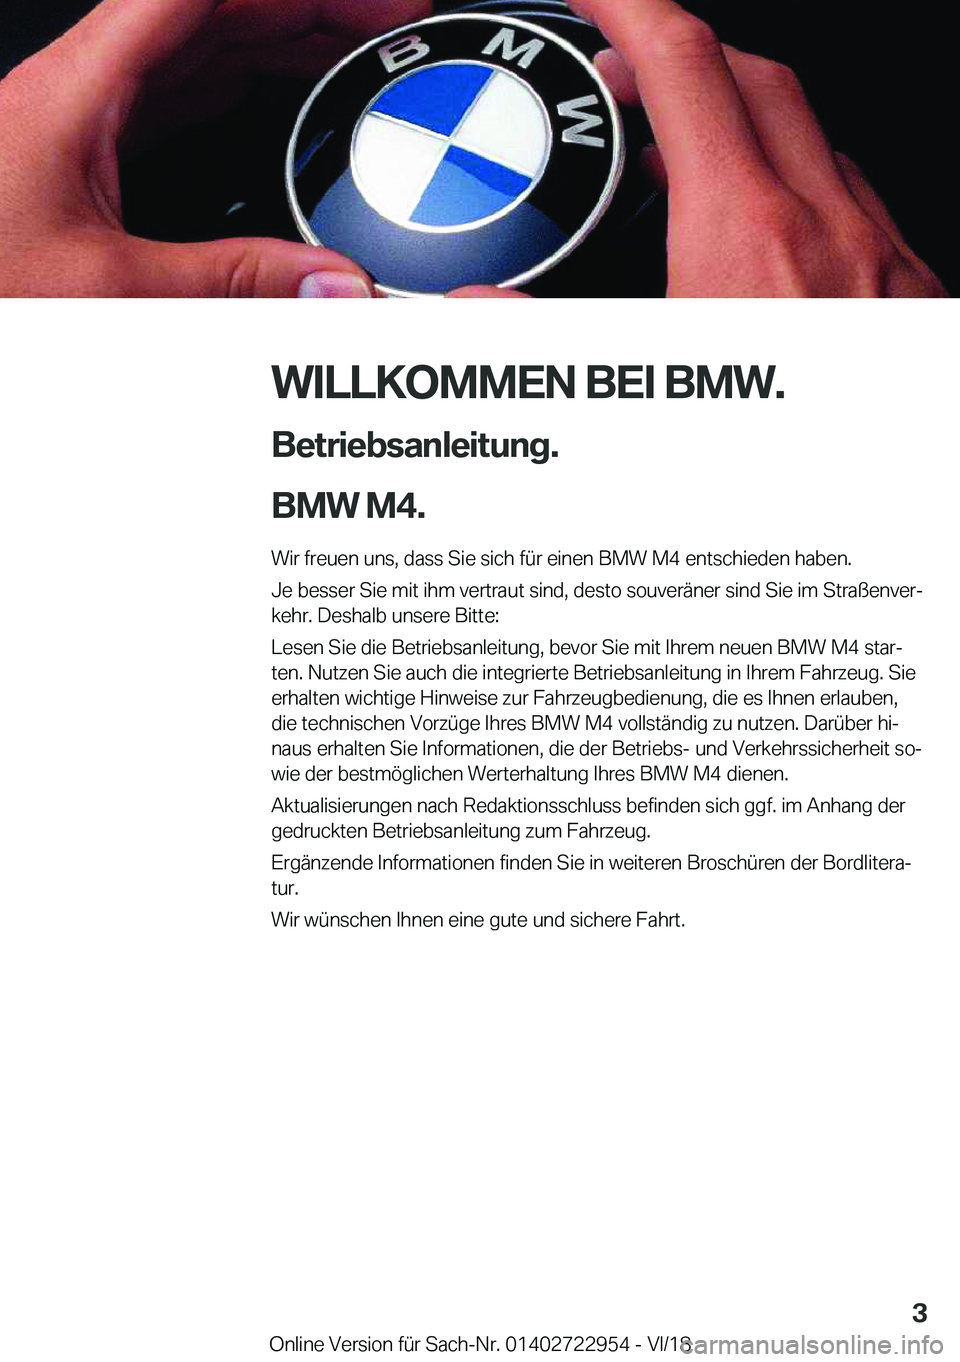 BMW M4 2019  Betriebsanleitungen (in German) �W�I�L�L�K�O�M�M�E�N��B�E�I��B�M�W�.�B�e�t�r�i�e�b�s�a�n�l�e�i�t�u�n�g�.
�B�M�W��M�4�. �W�i�r��f�r�e�u�e�n��u�n�s�,��d�a�s�s��S�i�e��s�i�c�h��f�